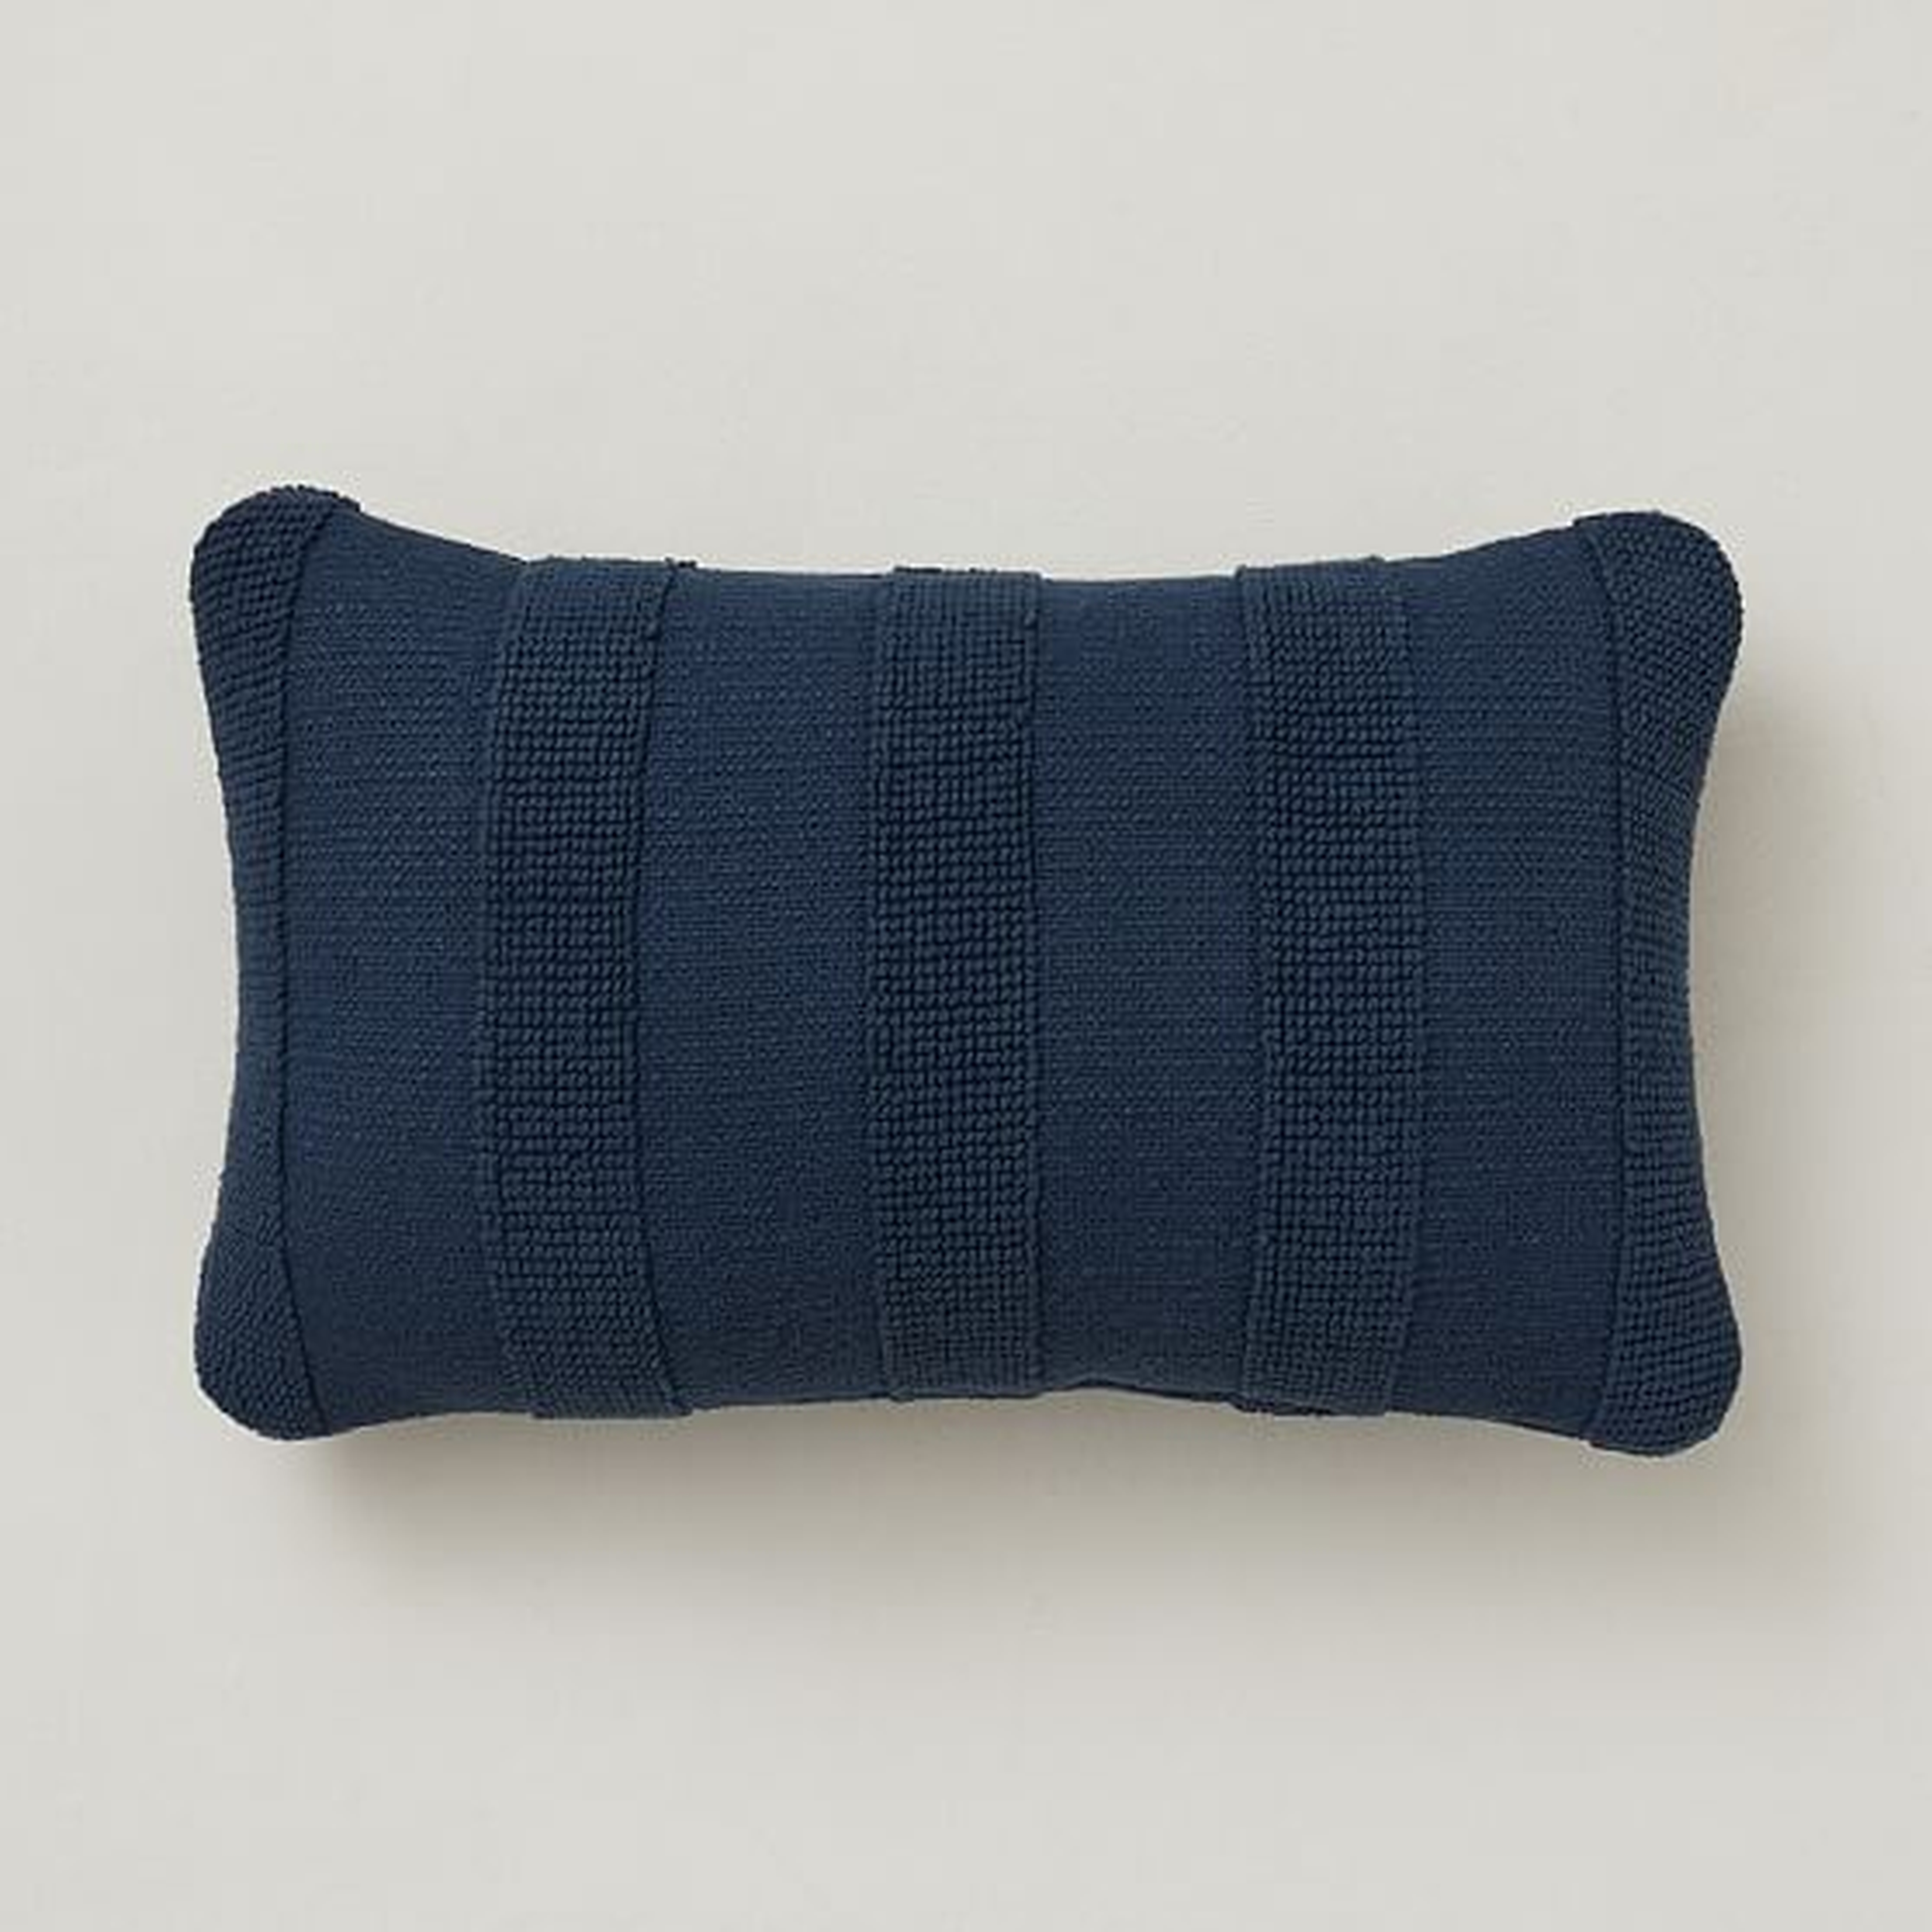 Outdoor Tufted Stripe Pillow, 12"x21", Midnight - West Elm